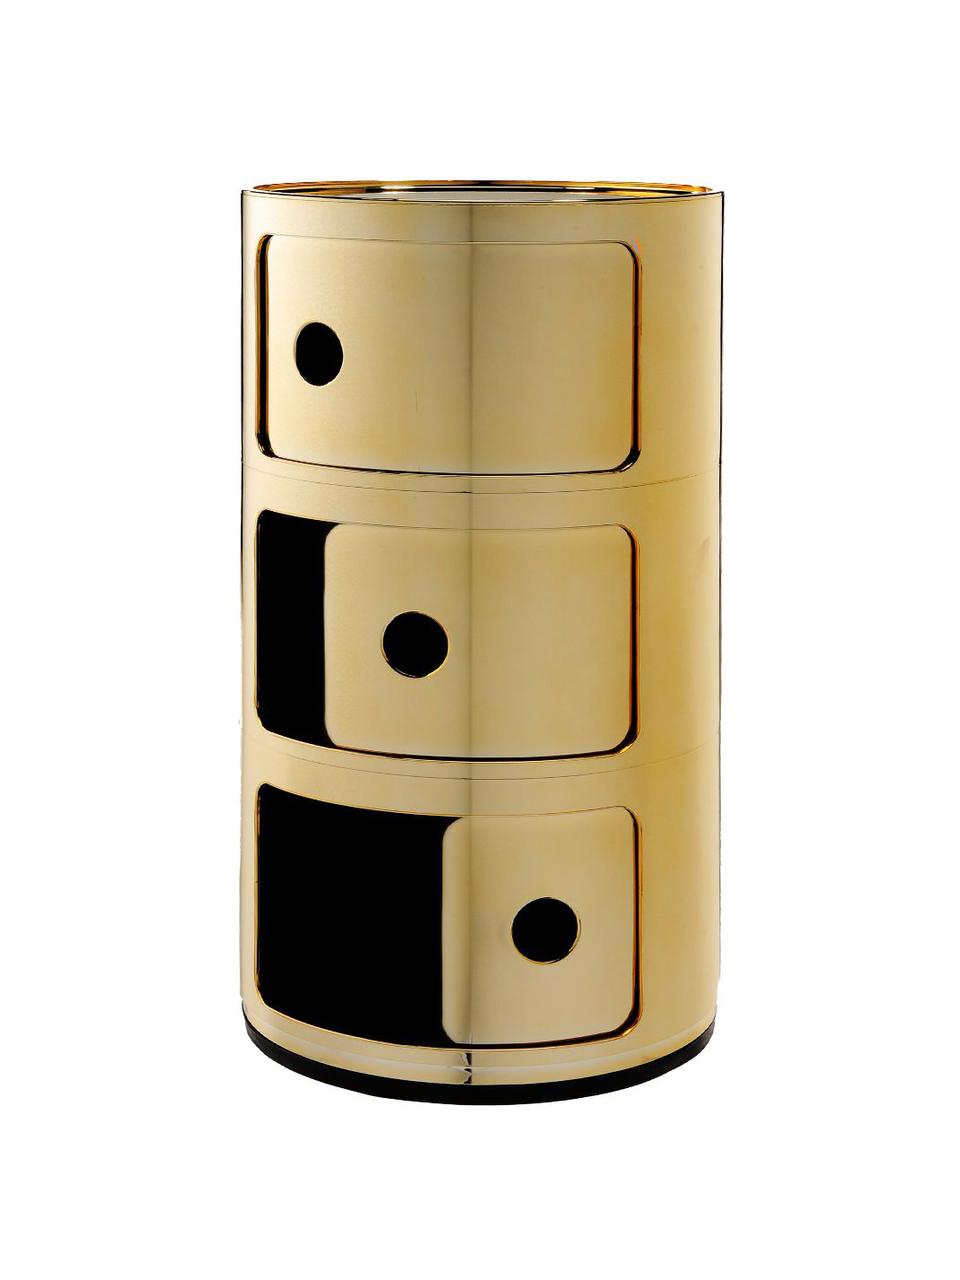 Design Container Componibili 3 Modules in Gold, Kunststoff (ABS), lackiert, Greenguard-zertifiziert, Gold-Metallic, Ø 32 x H 59 cm